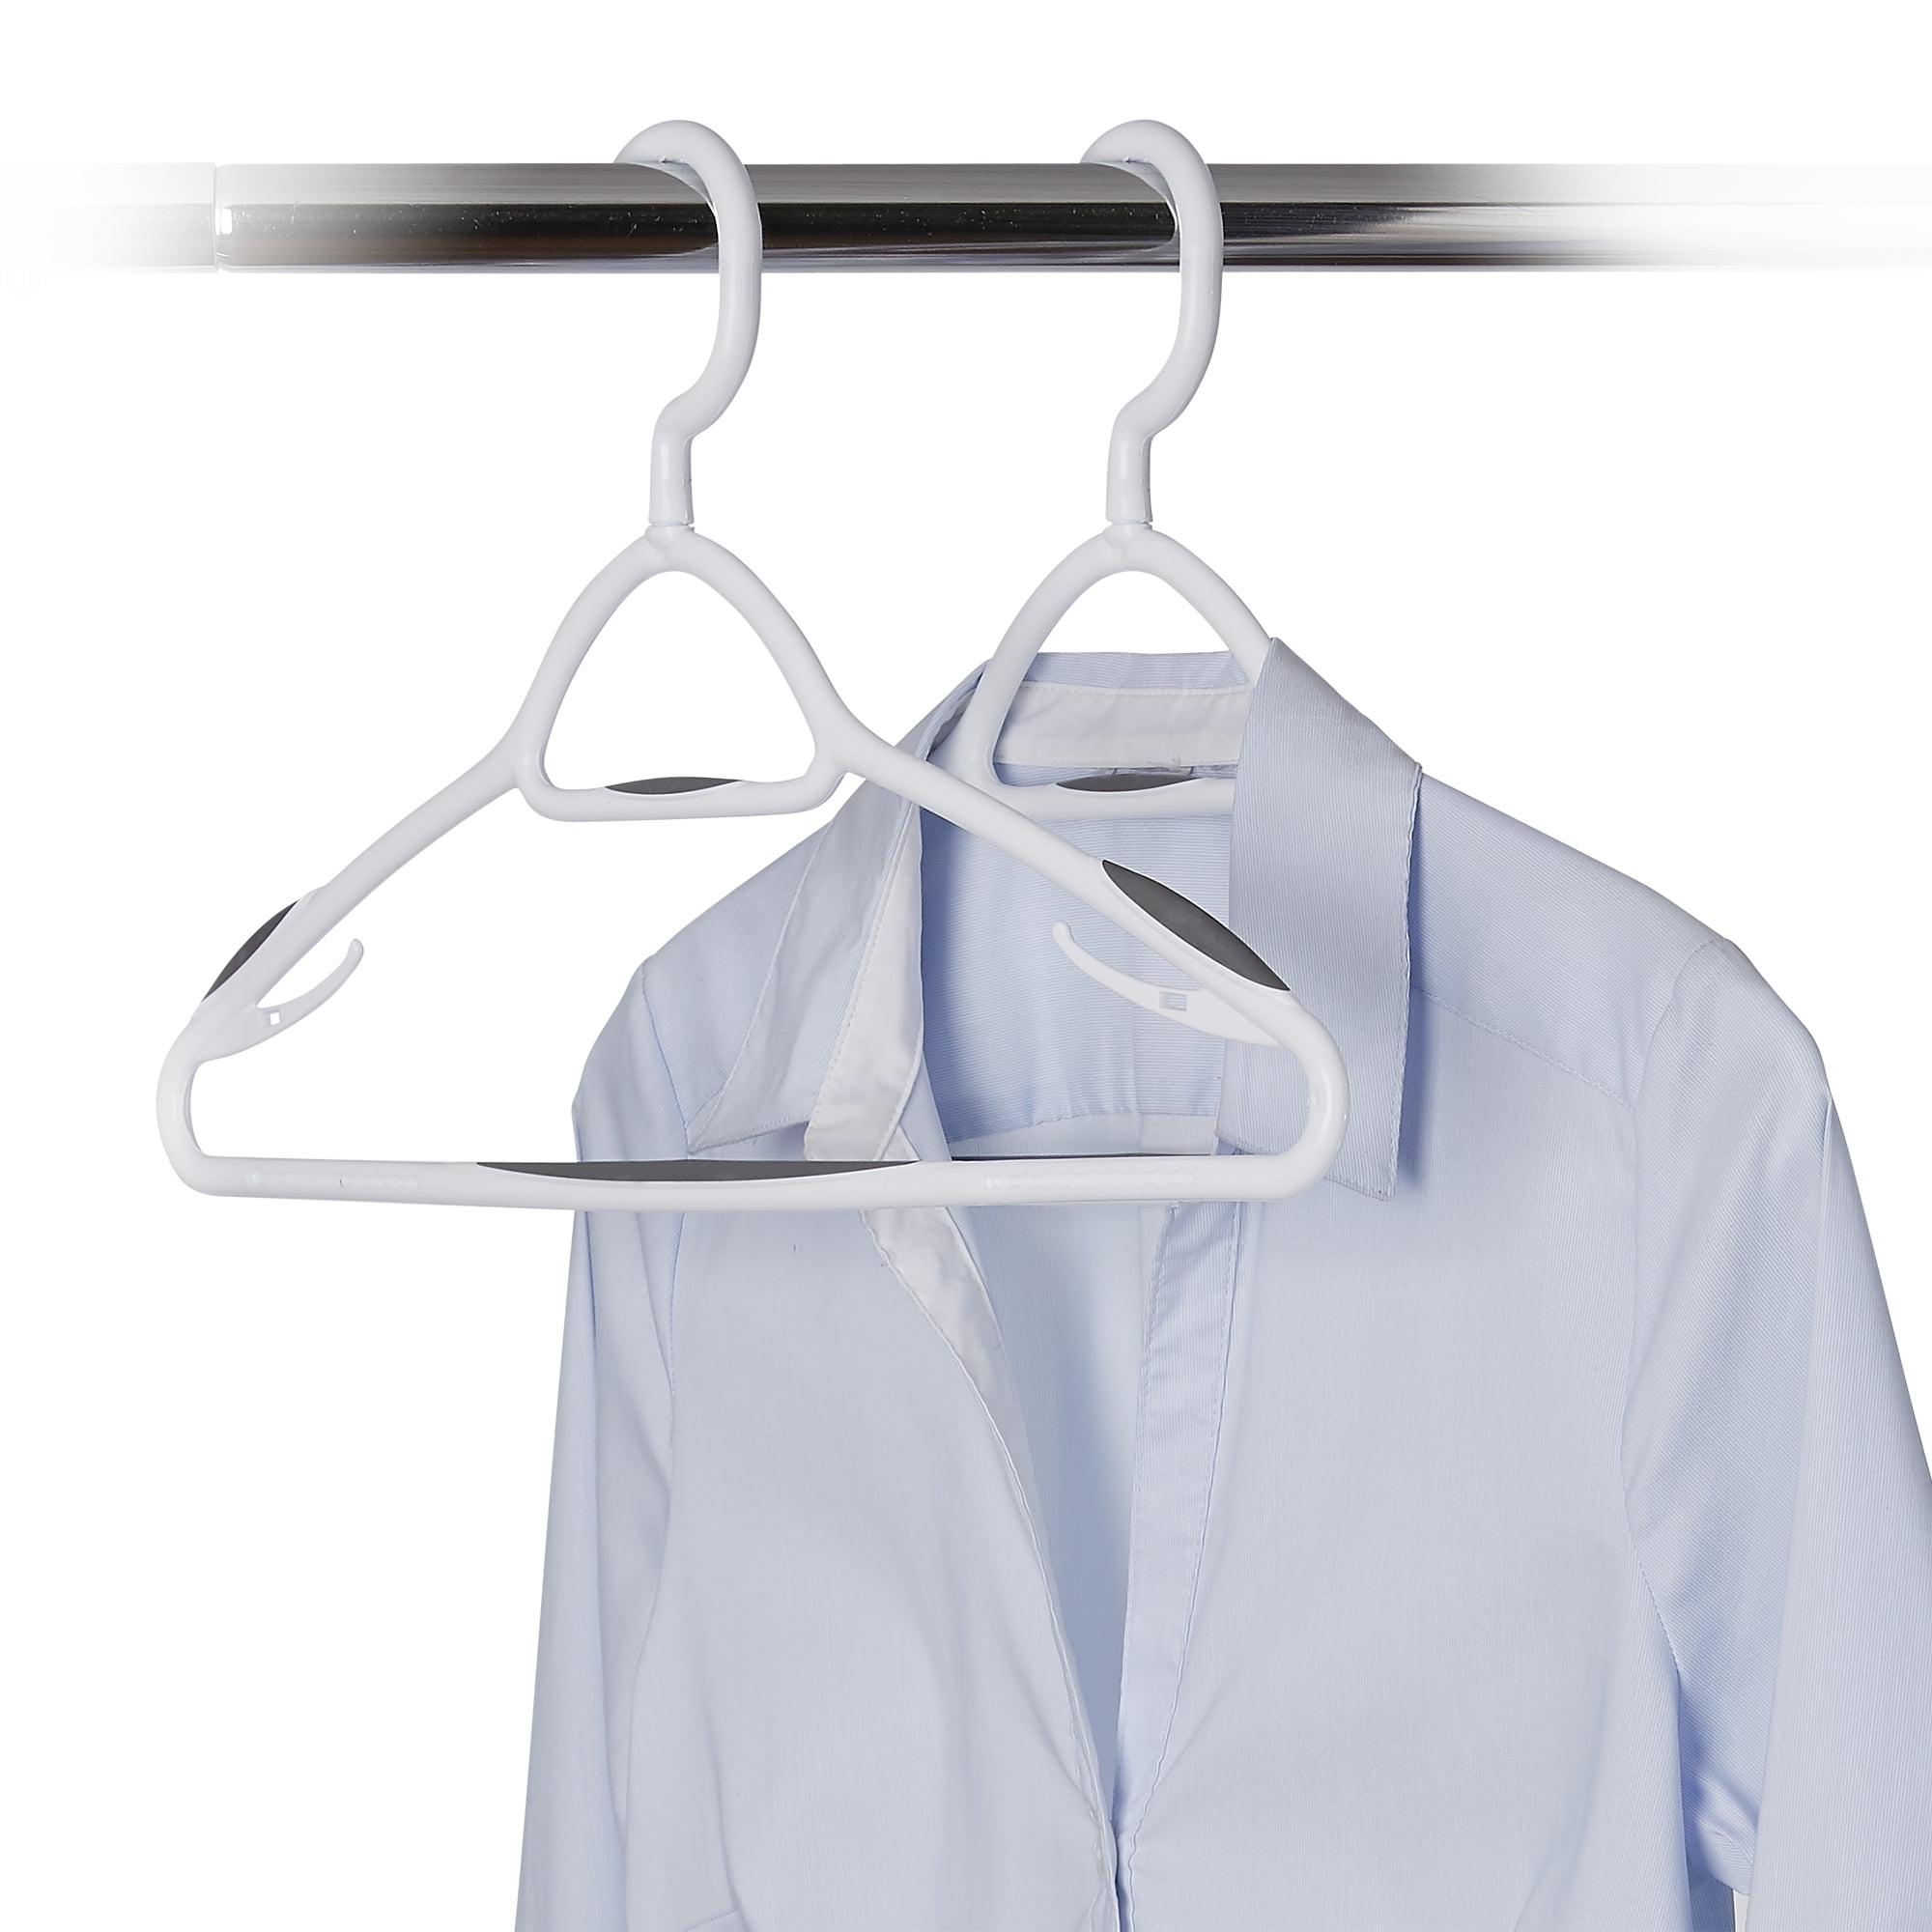 Zober Classic Durable Plastic & Tubular Shirt Hangers (60-Pack) Grey